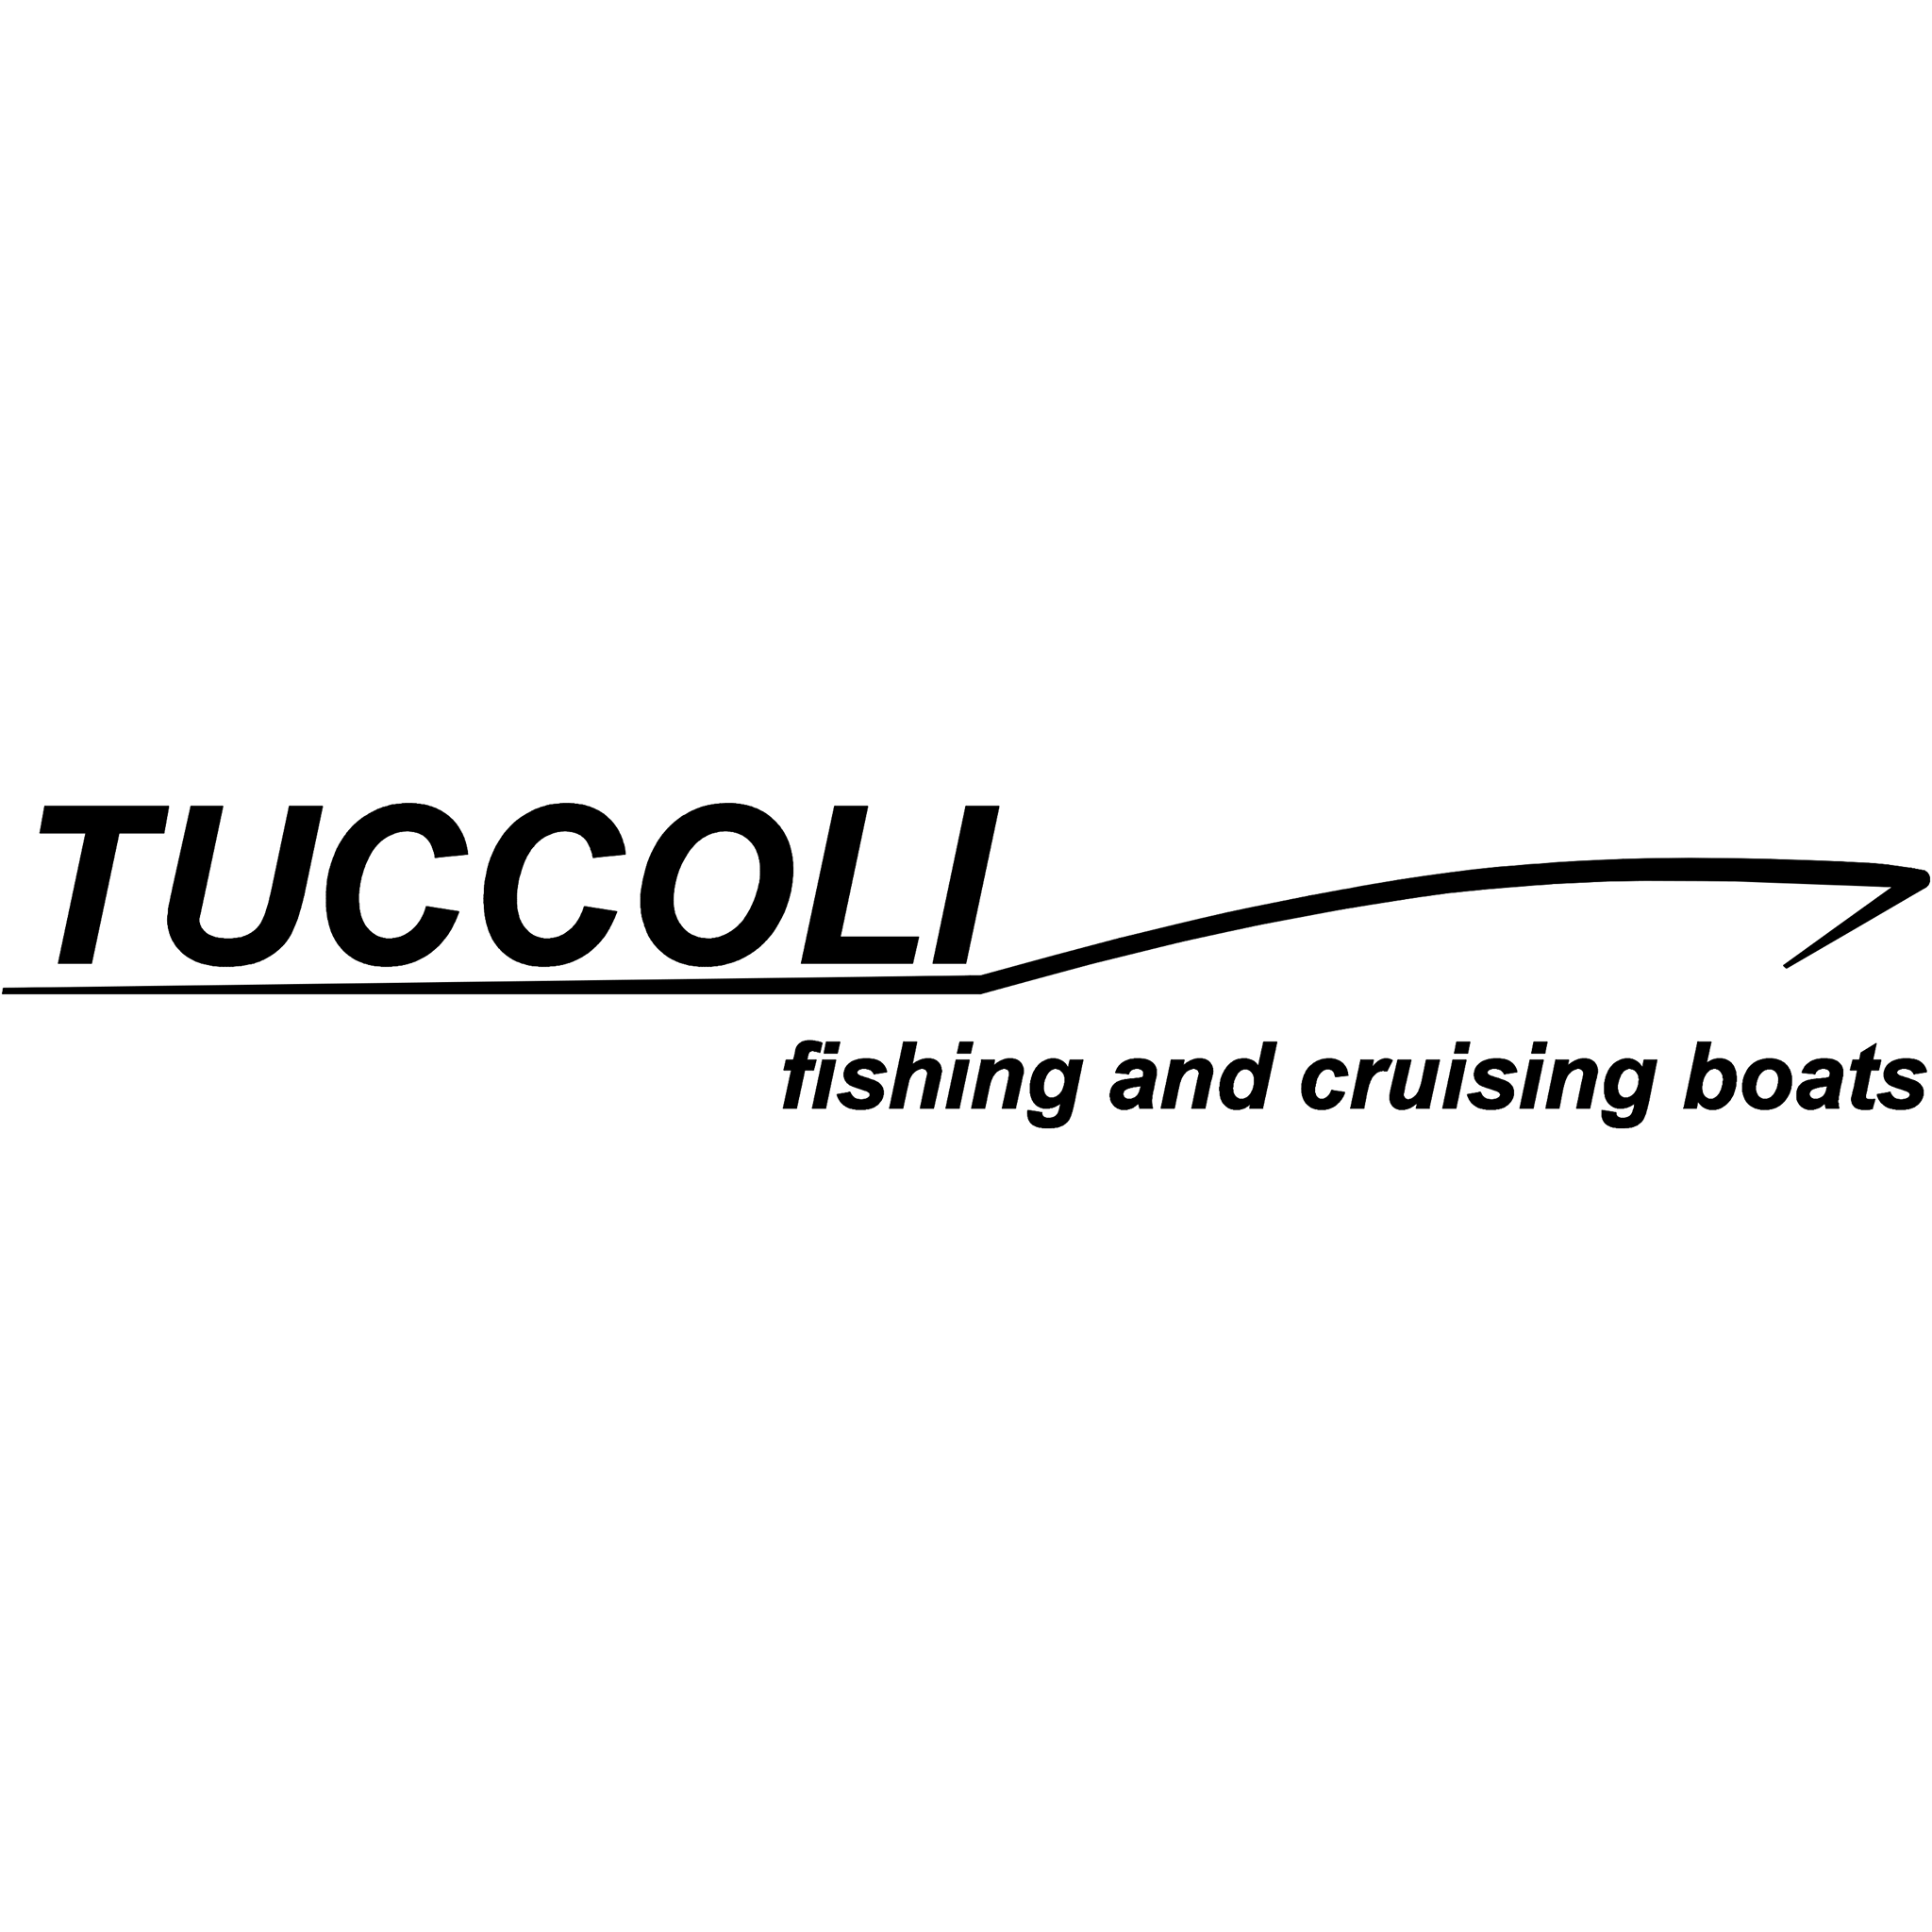 Tuccoli logo